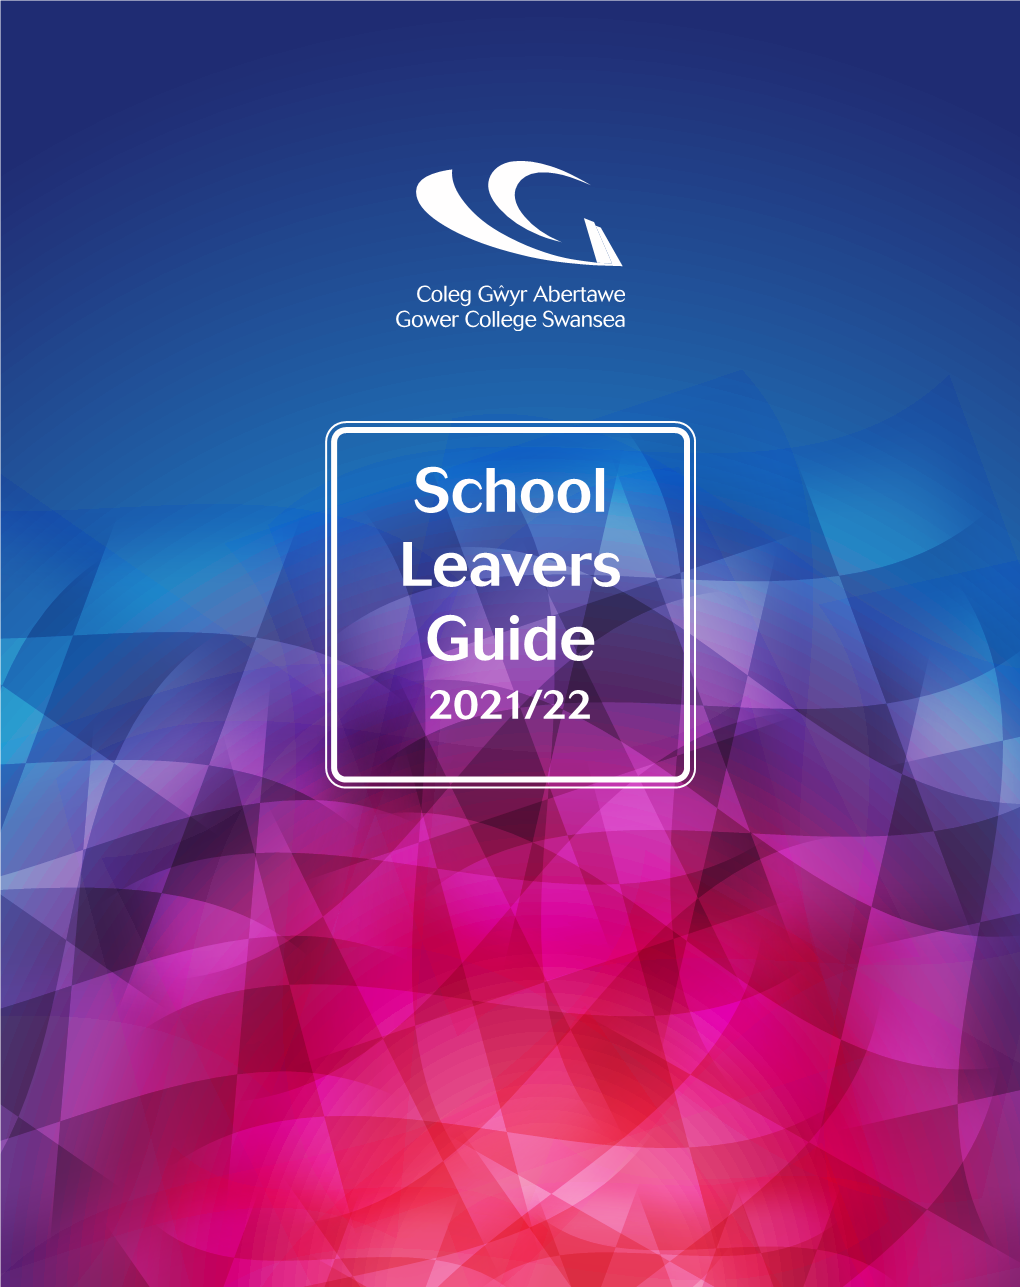 School Leavers Guide 2021/22 Contents